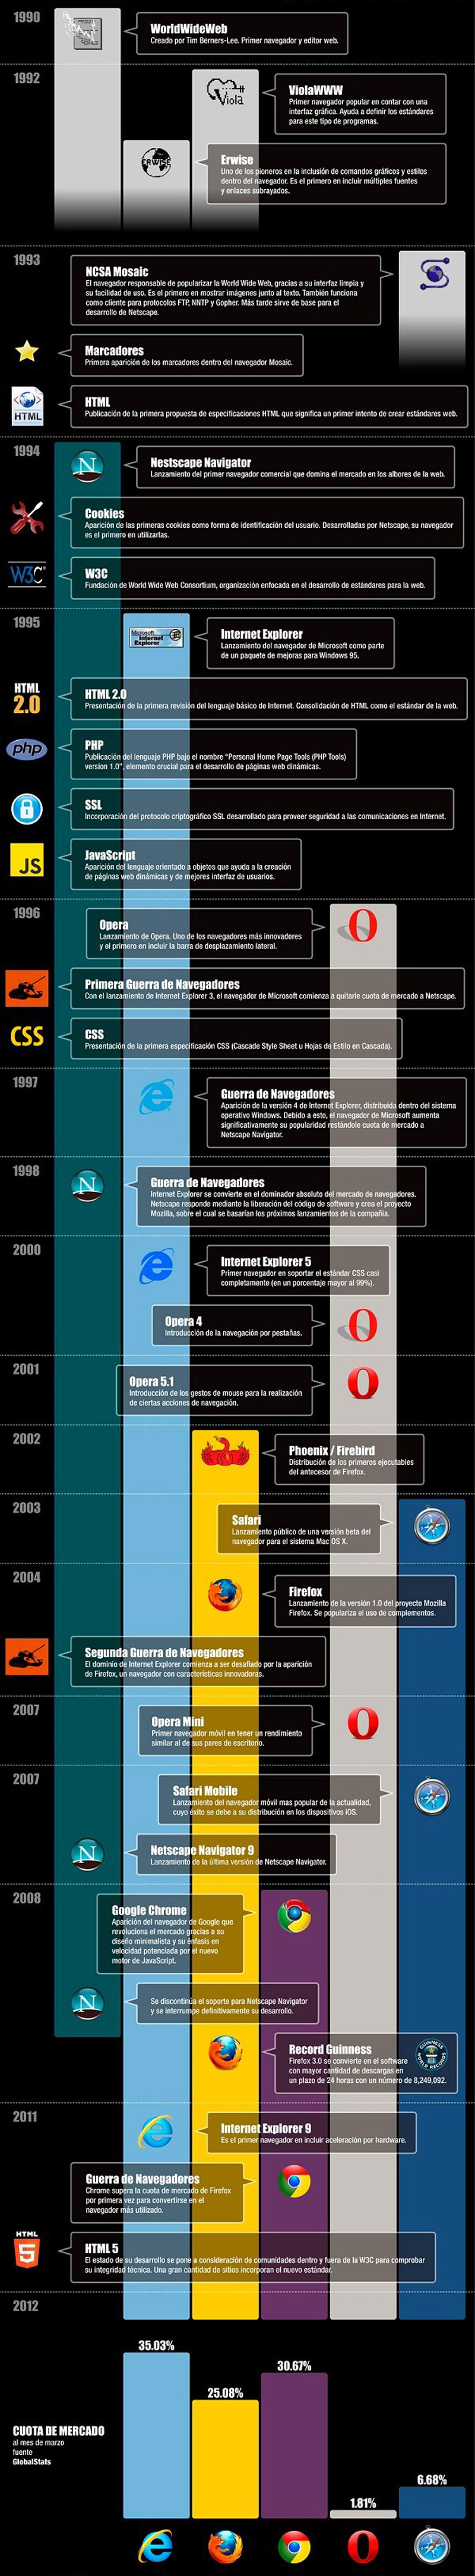 Infografia Historia evolucion navegadores de Internet